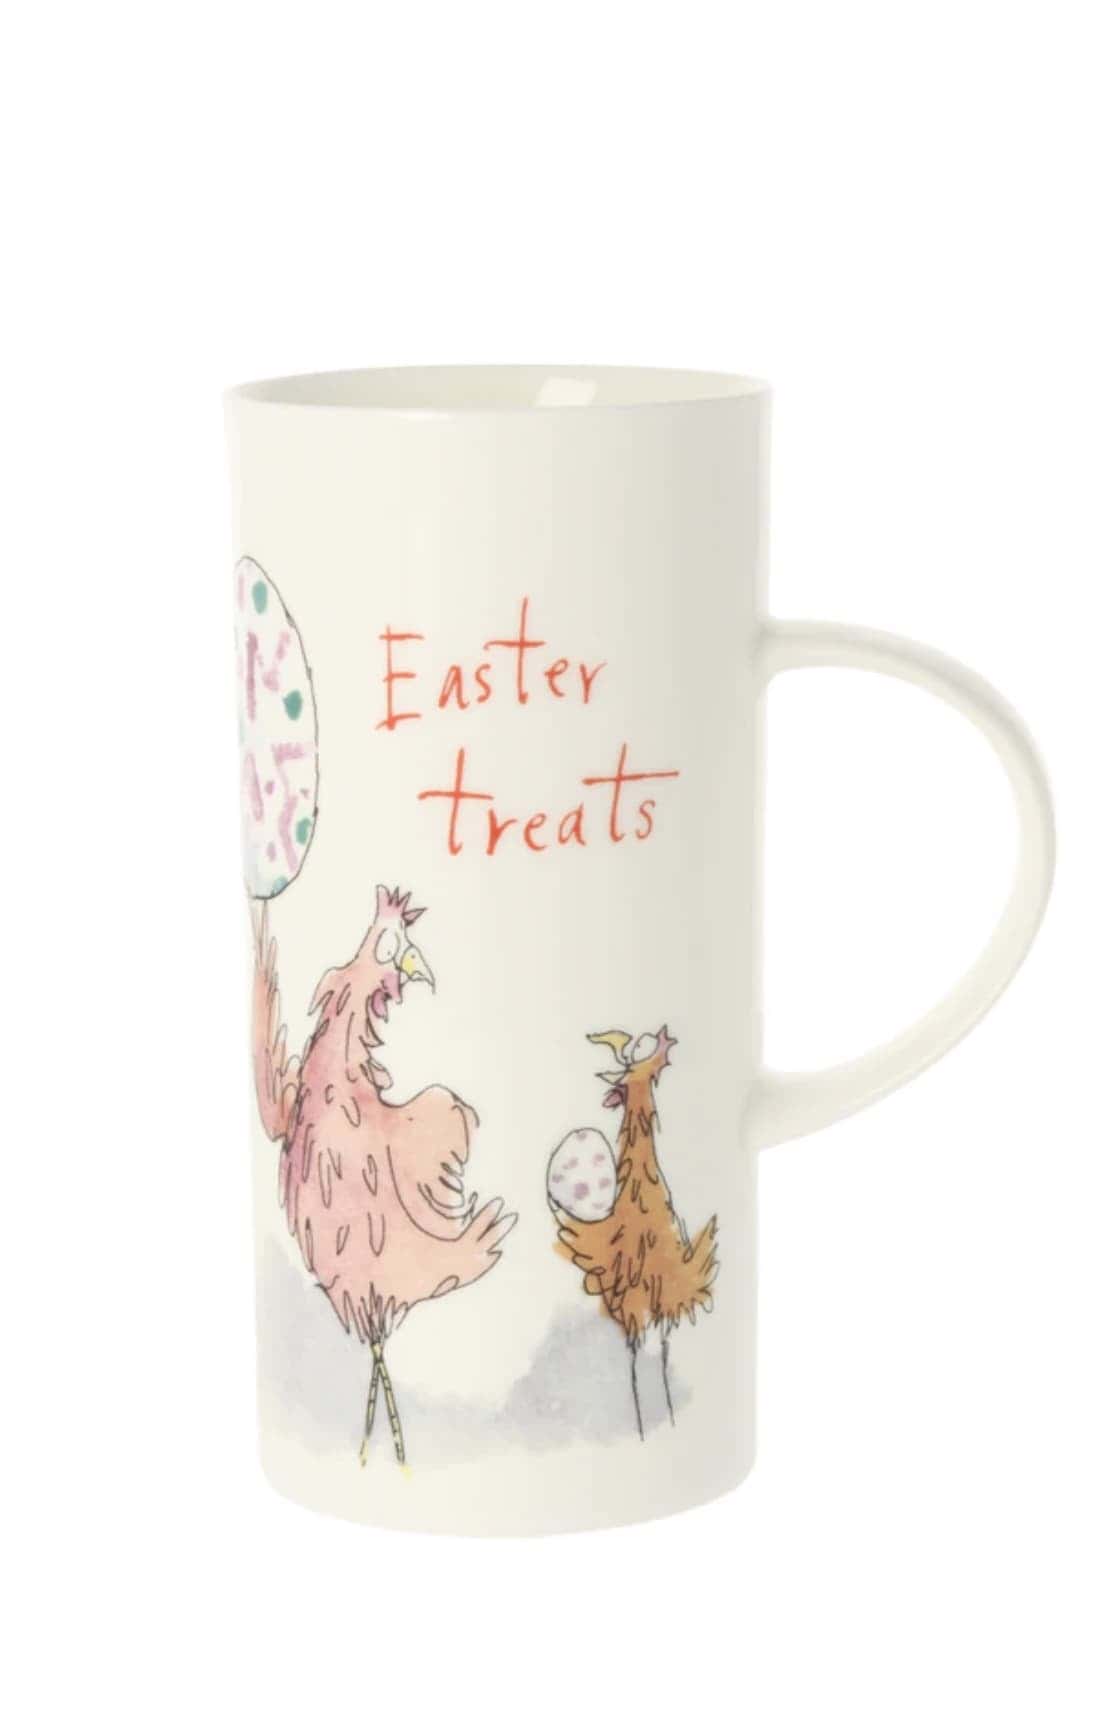 'Easter Treats' Tall Mug by Quentin Blake